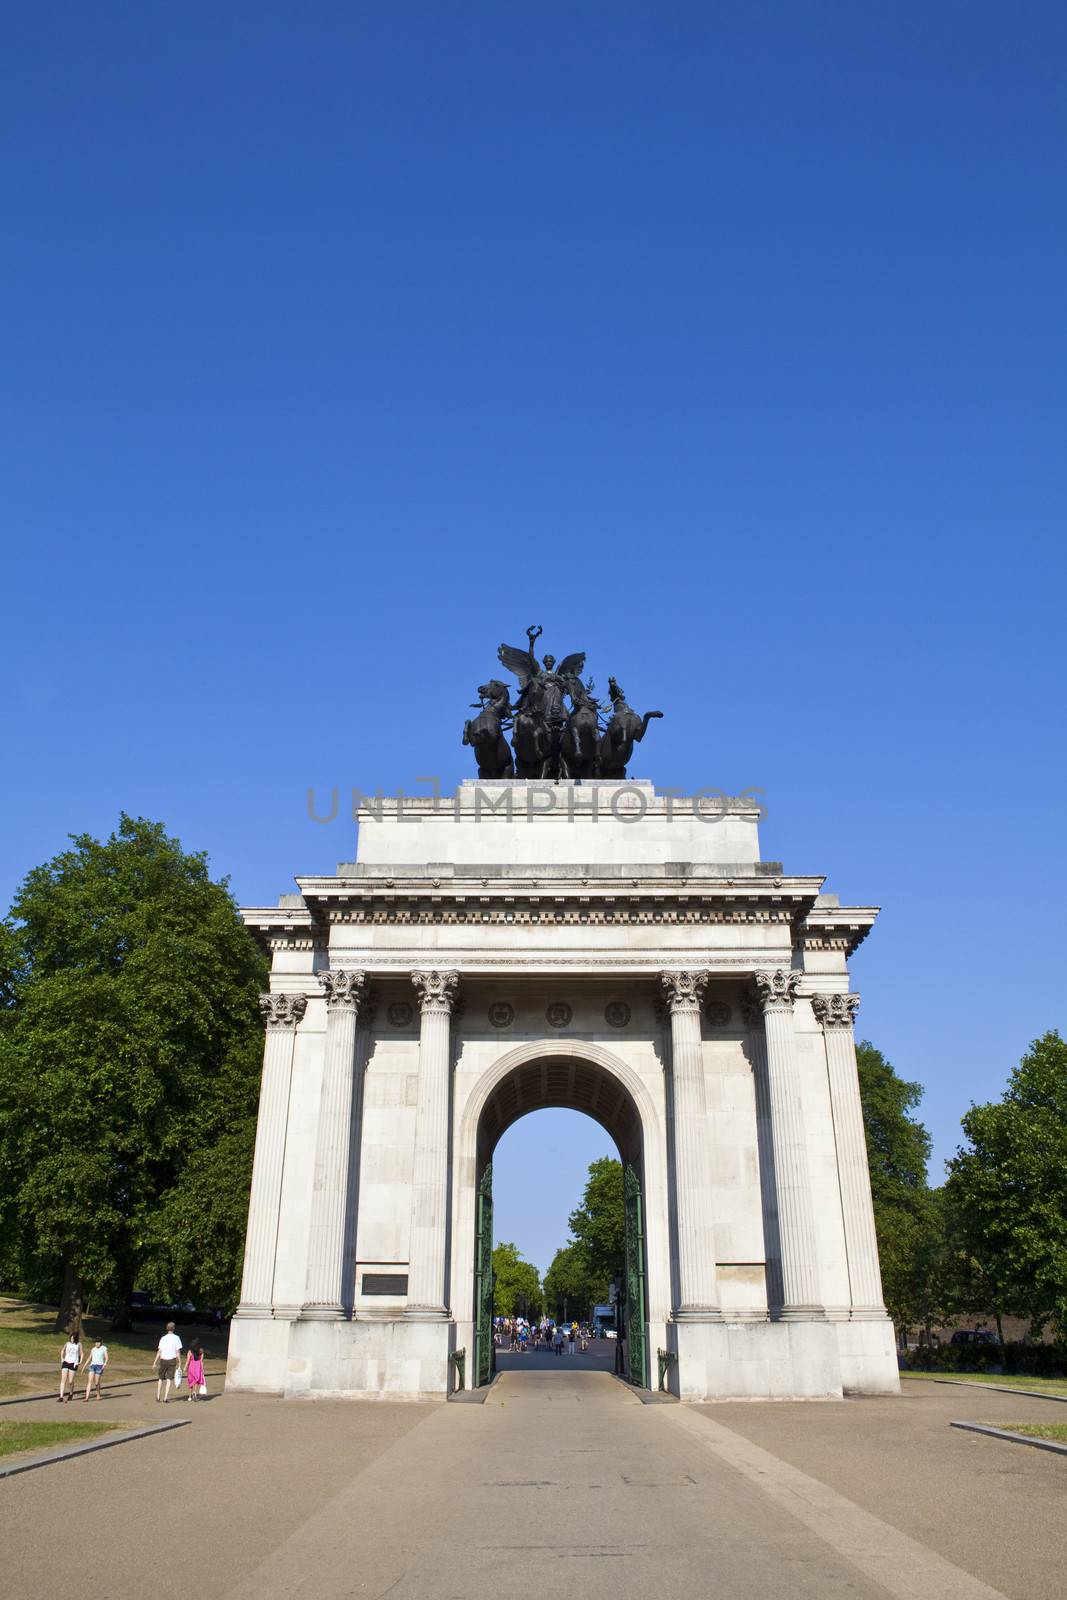 Wellington Arch in London by chrisdorney